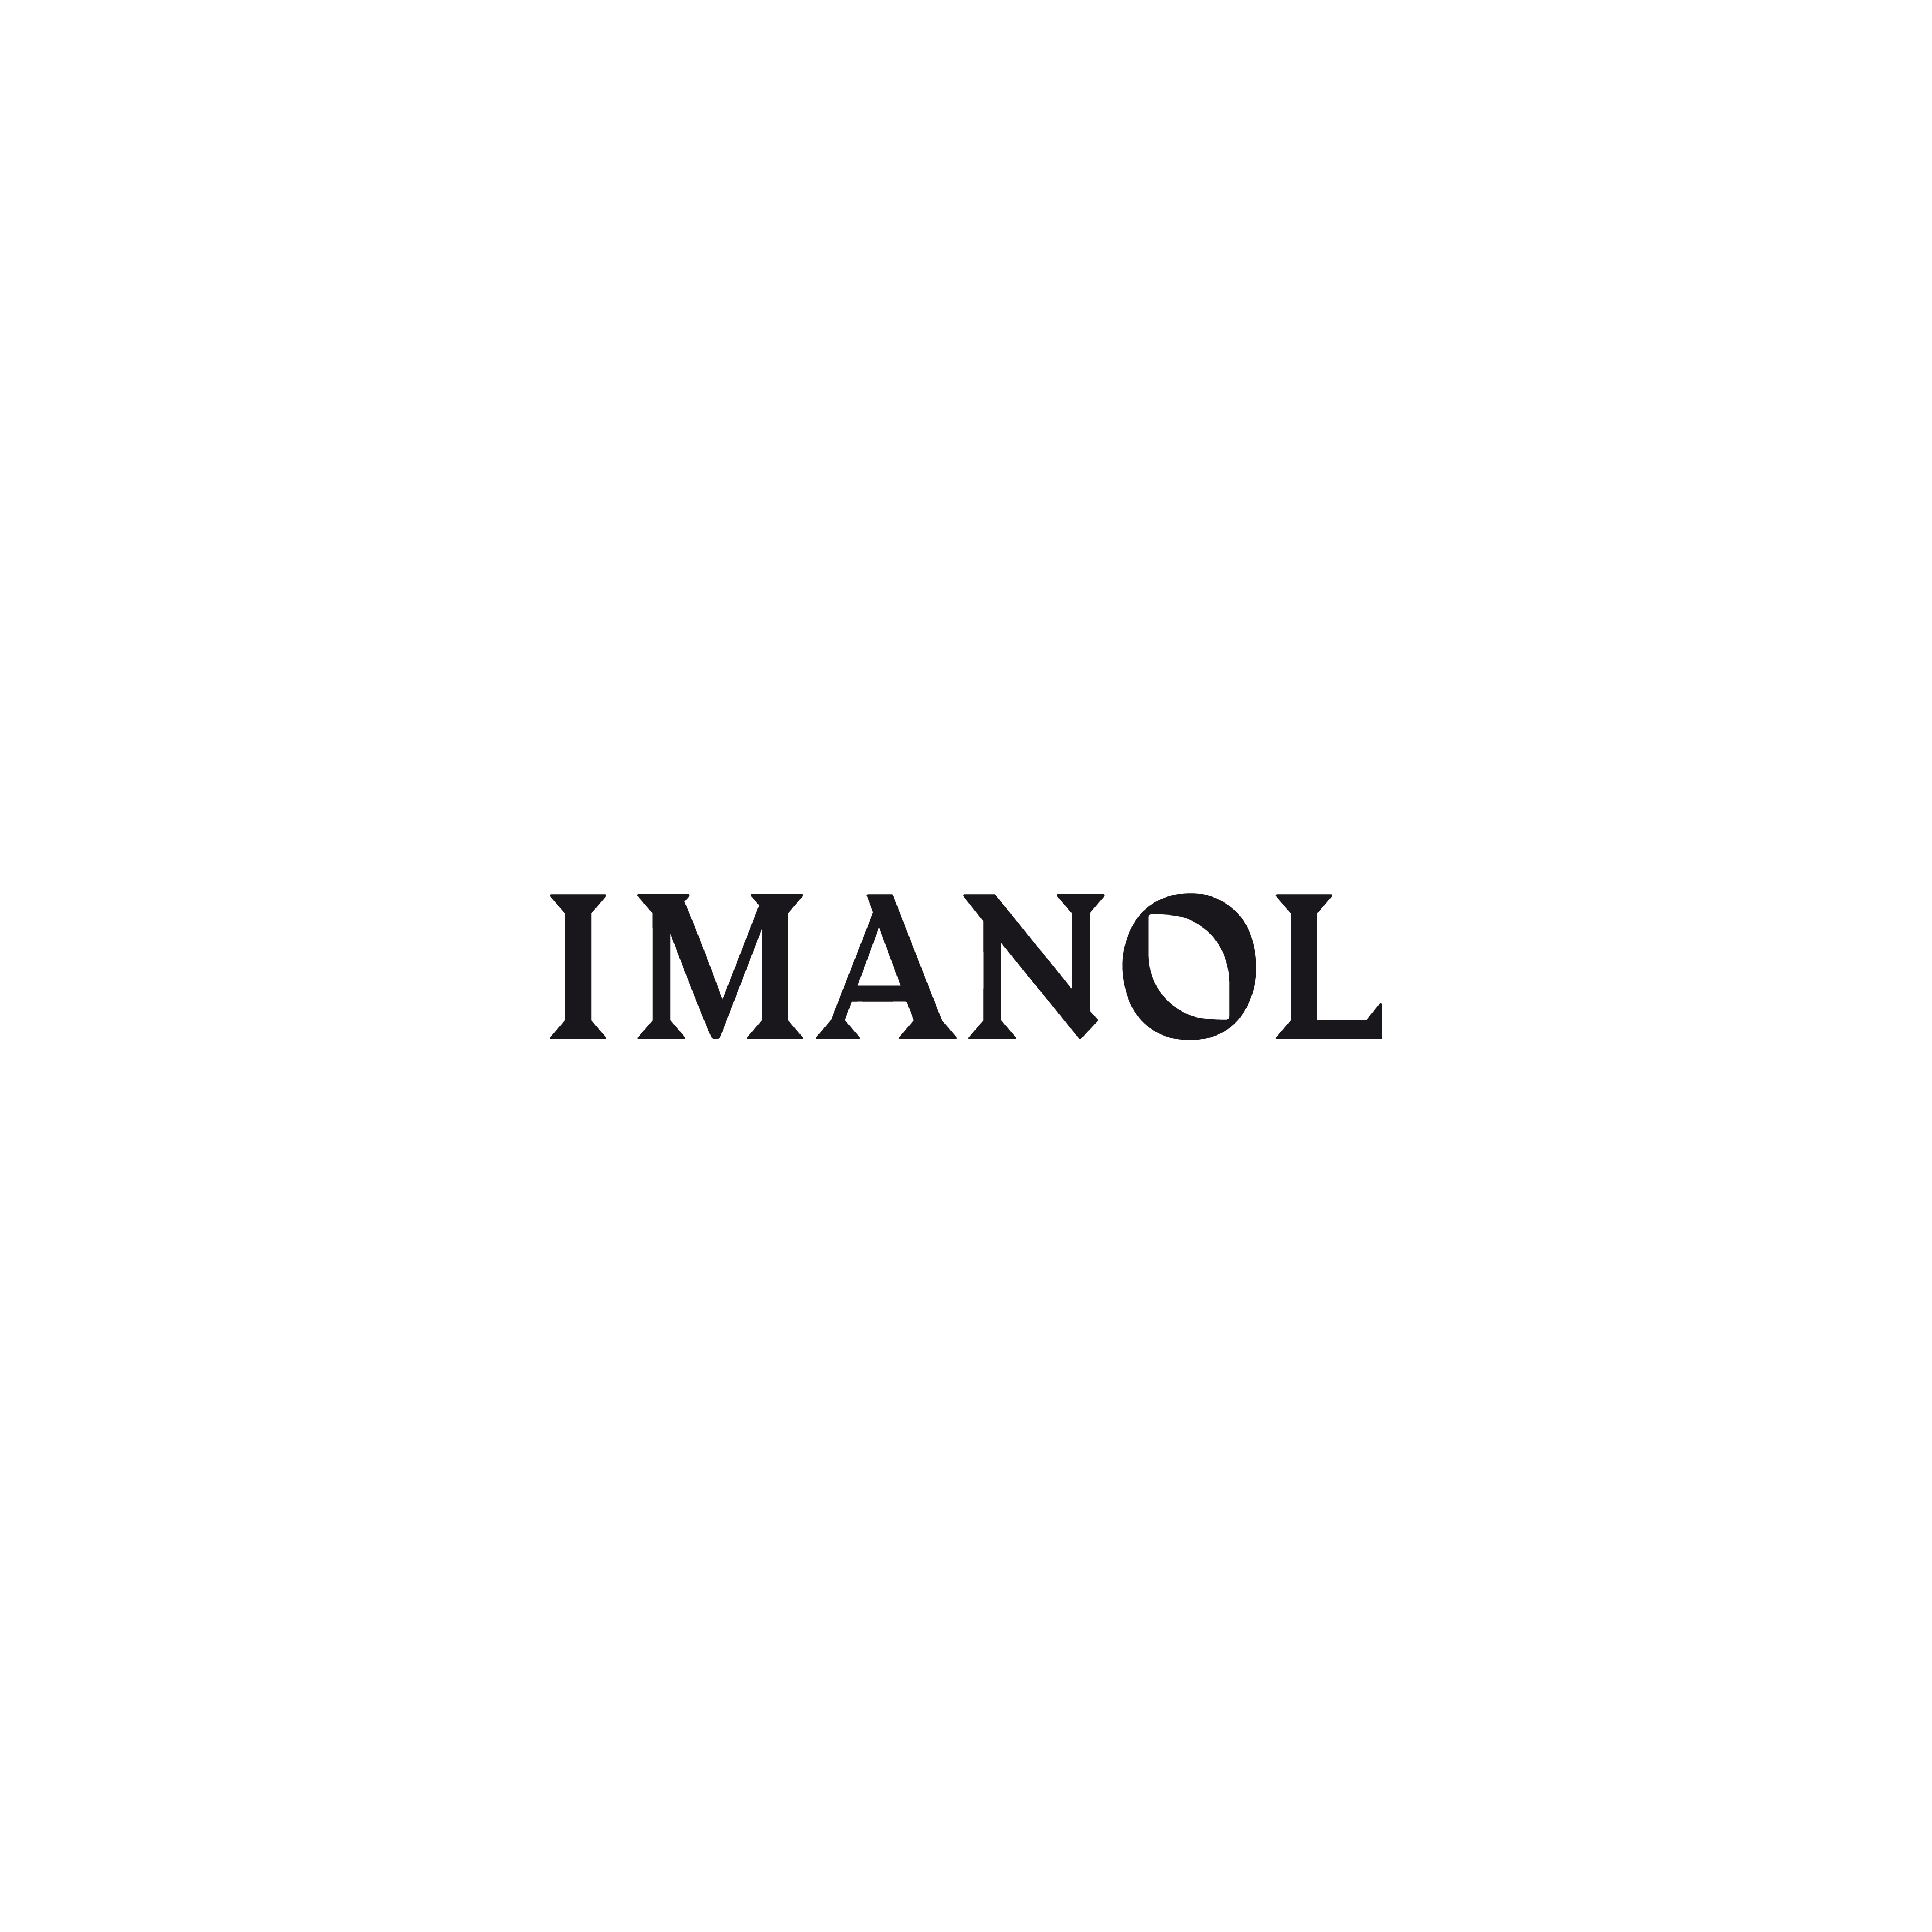 Imanol: Imanol